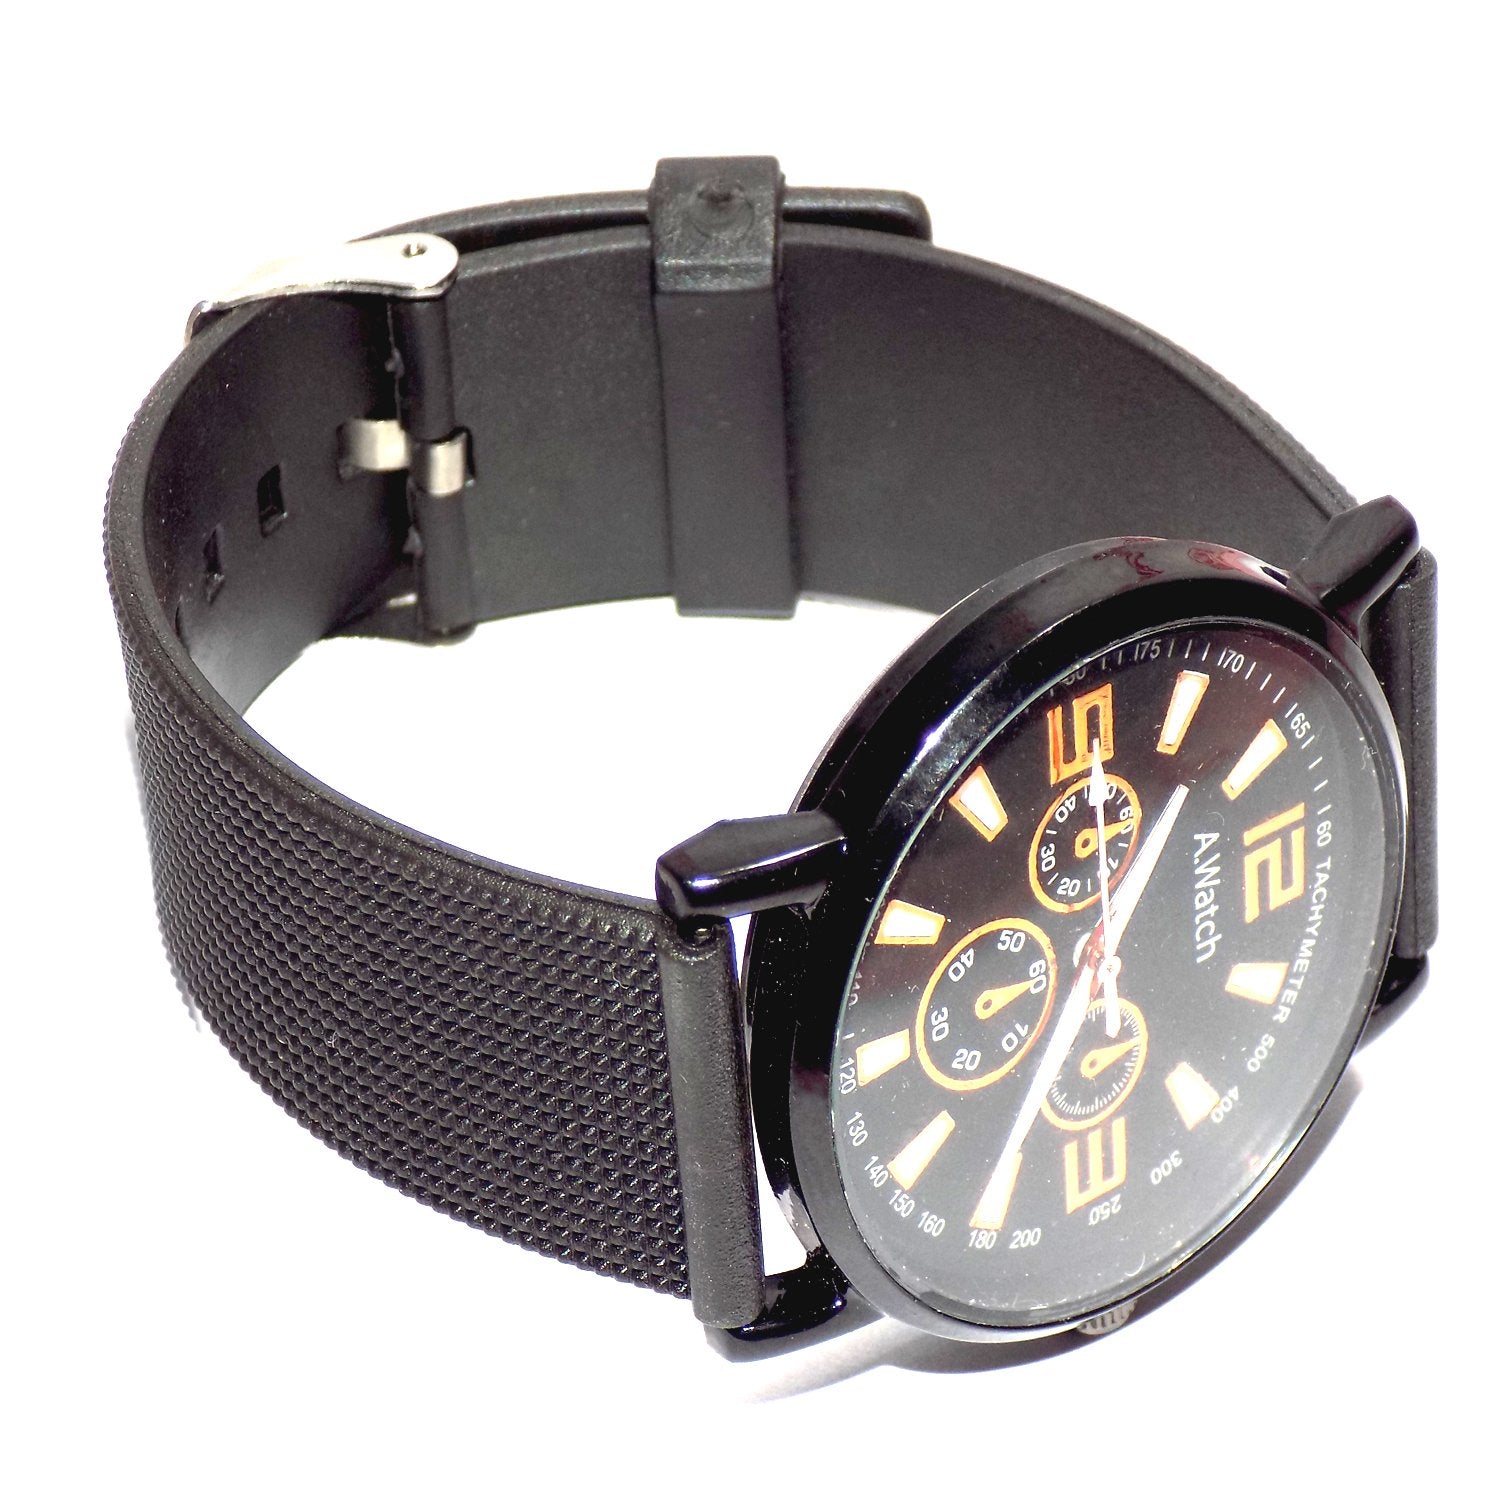 1817 Unique & Premium Analogue Stylish Watch With Silicon Wrist Band - SkyShopy